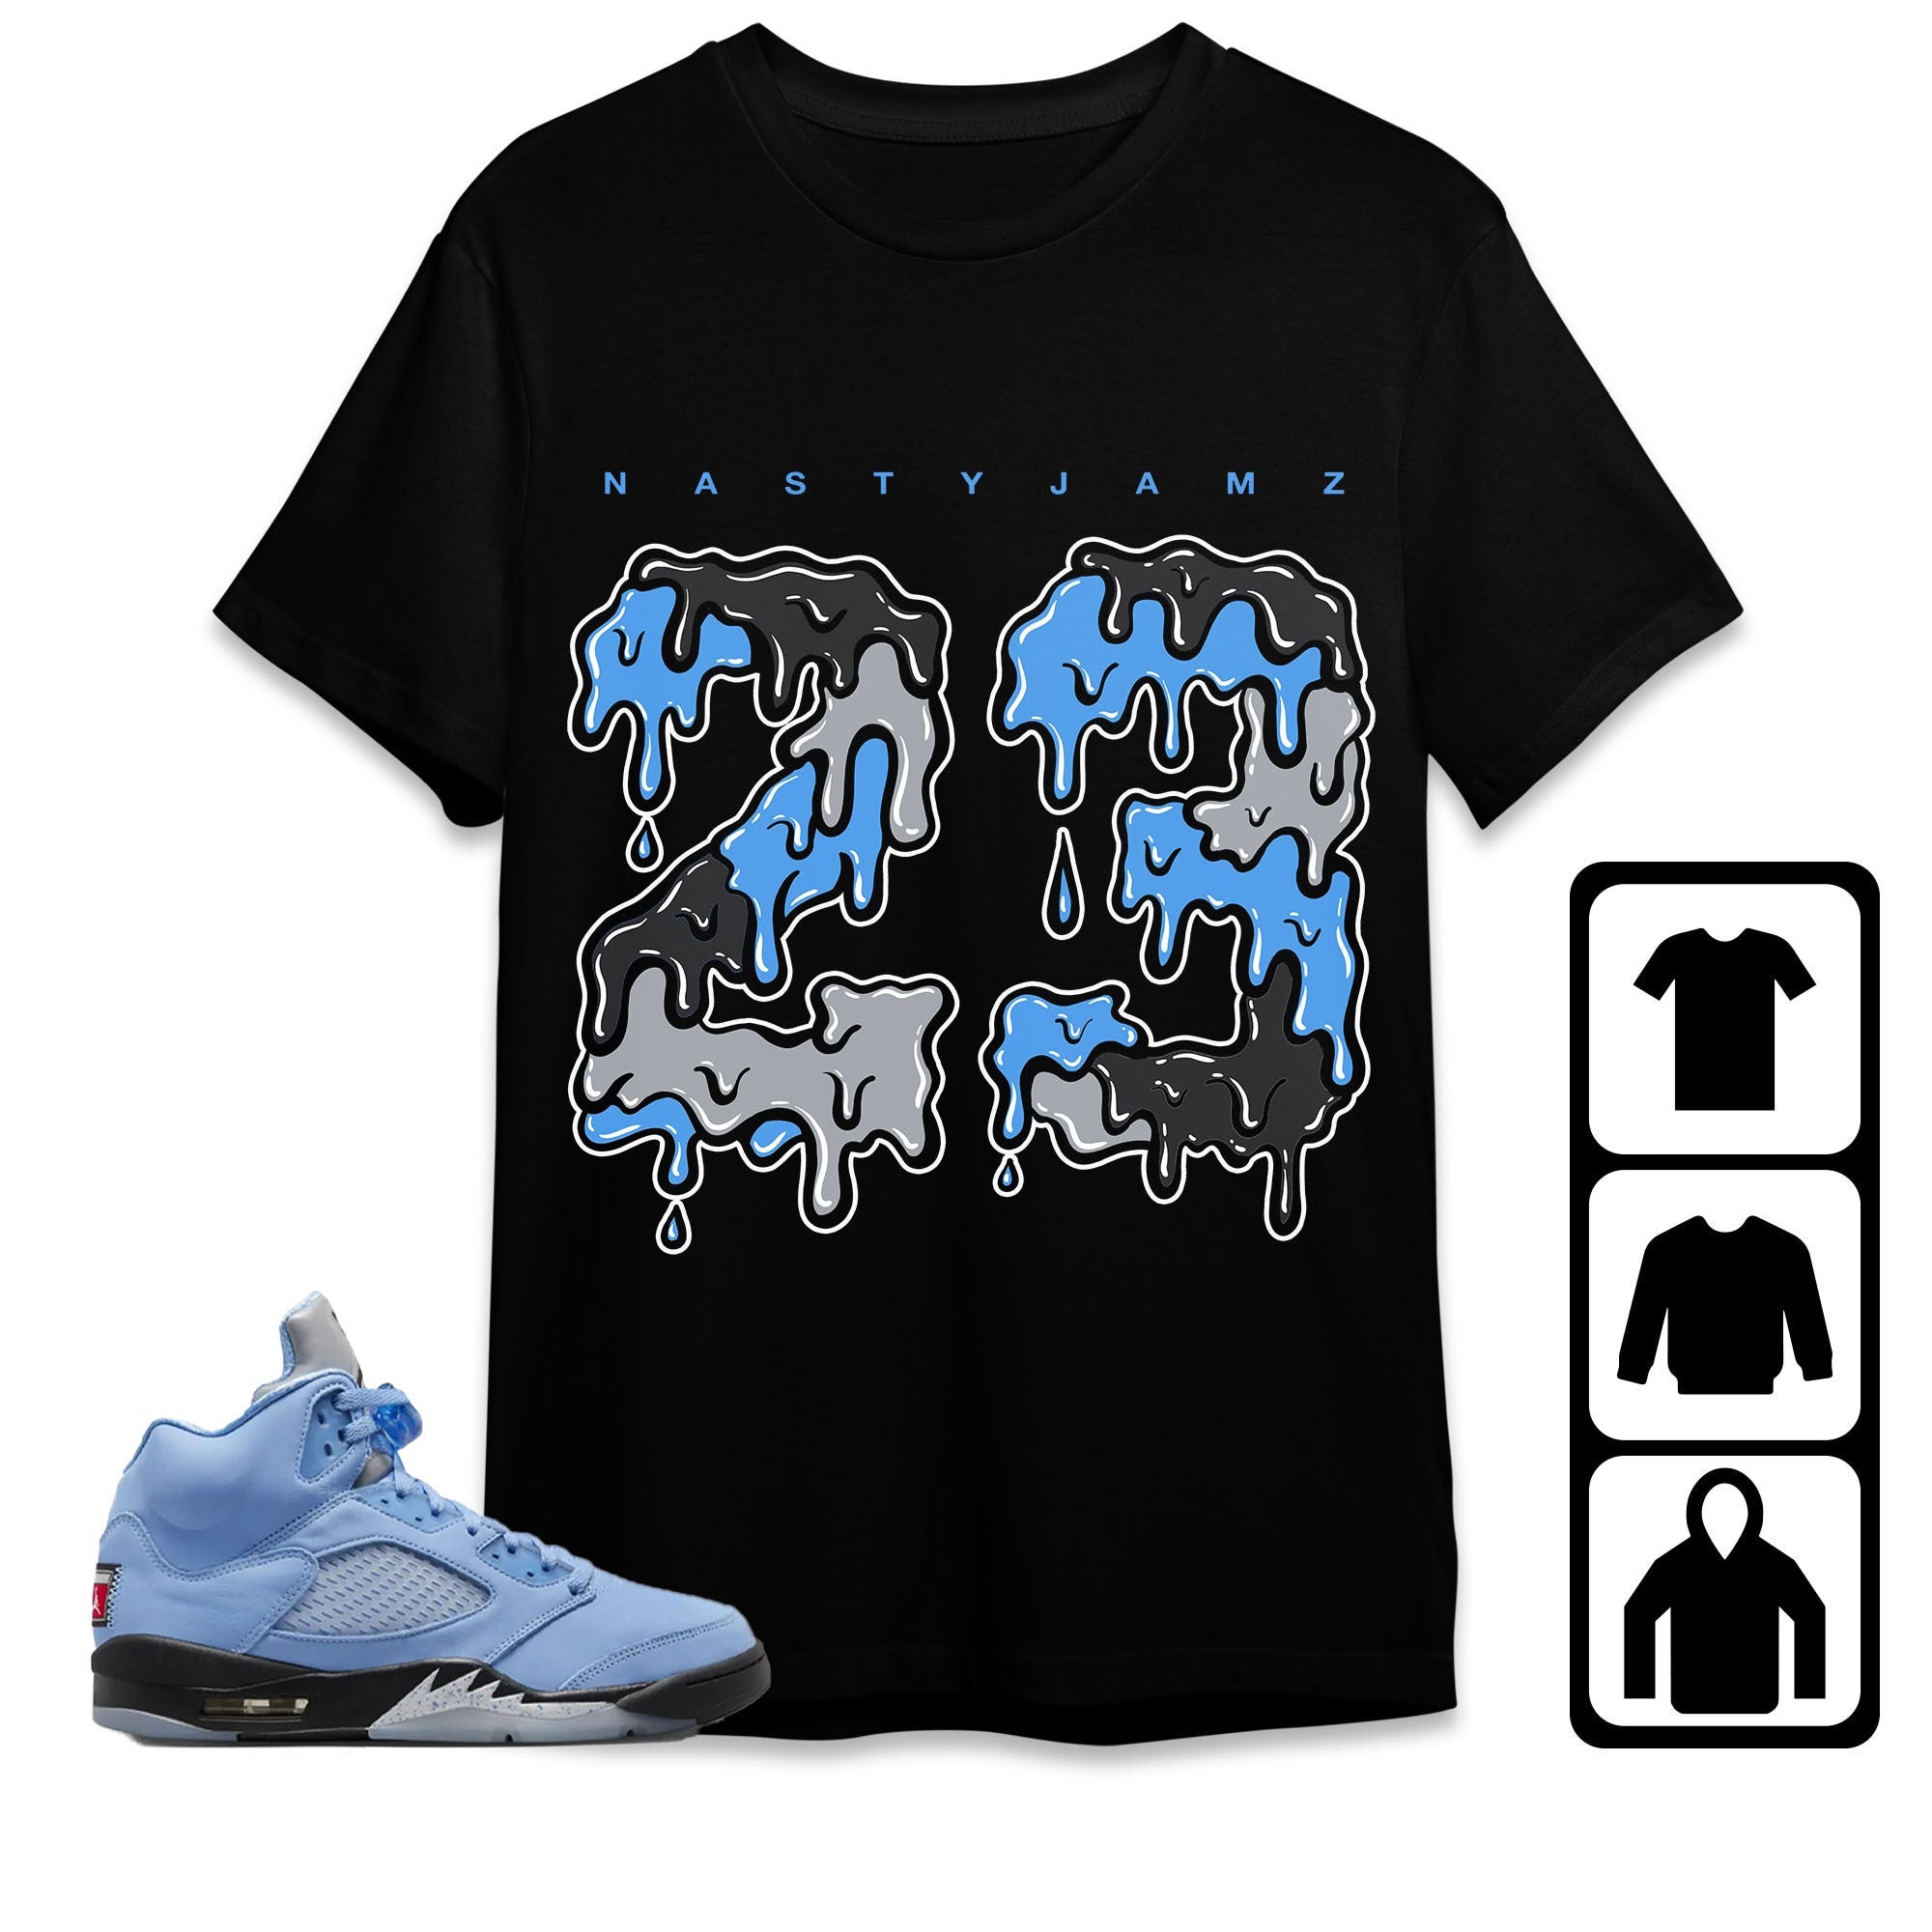  Shirt To Match Jordan Retro 5 University Blue,UNC Juice Graphic  Tee,UNC Toe (XL, Black) : Handmade Products